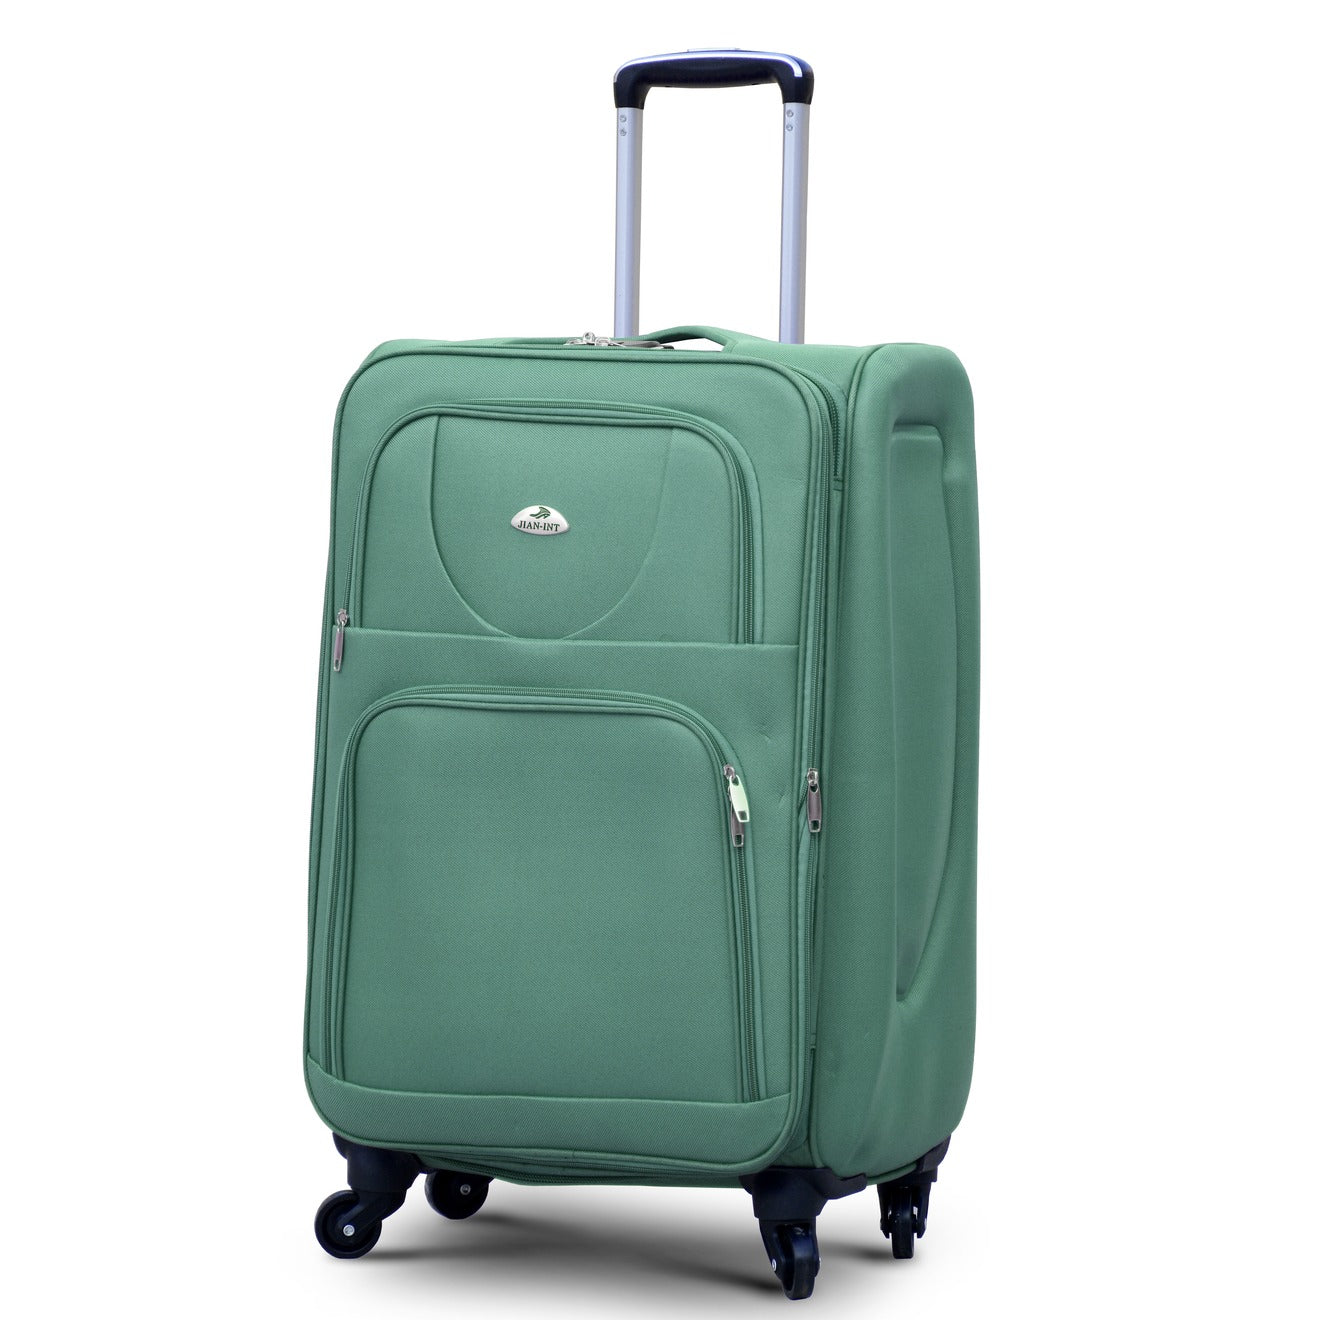 SJ JIAN 4 Wheel Lightweight Soft Material Luggage Bag Zaappy